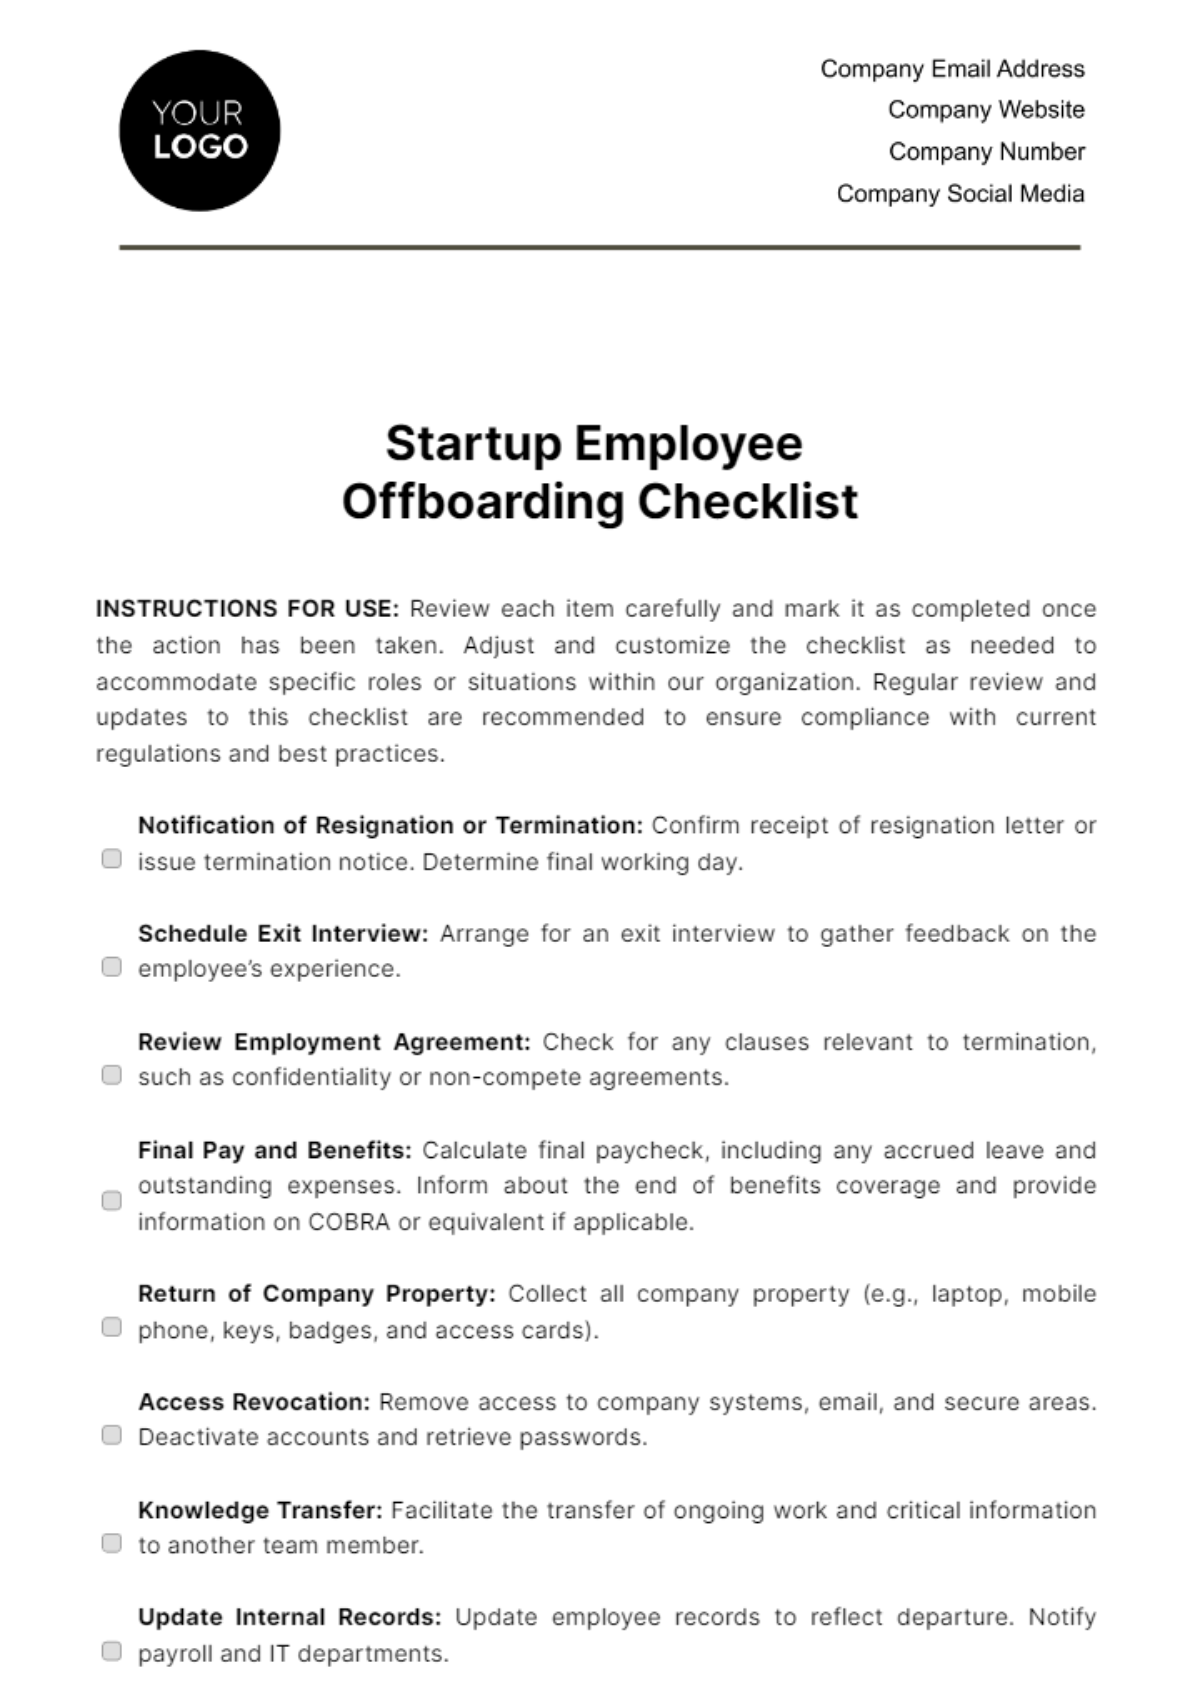 Startup Employee Offboarding Checklist Template